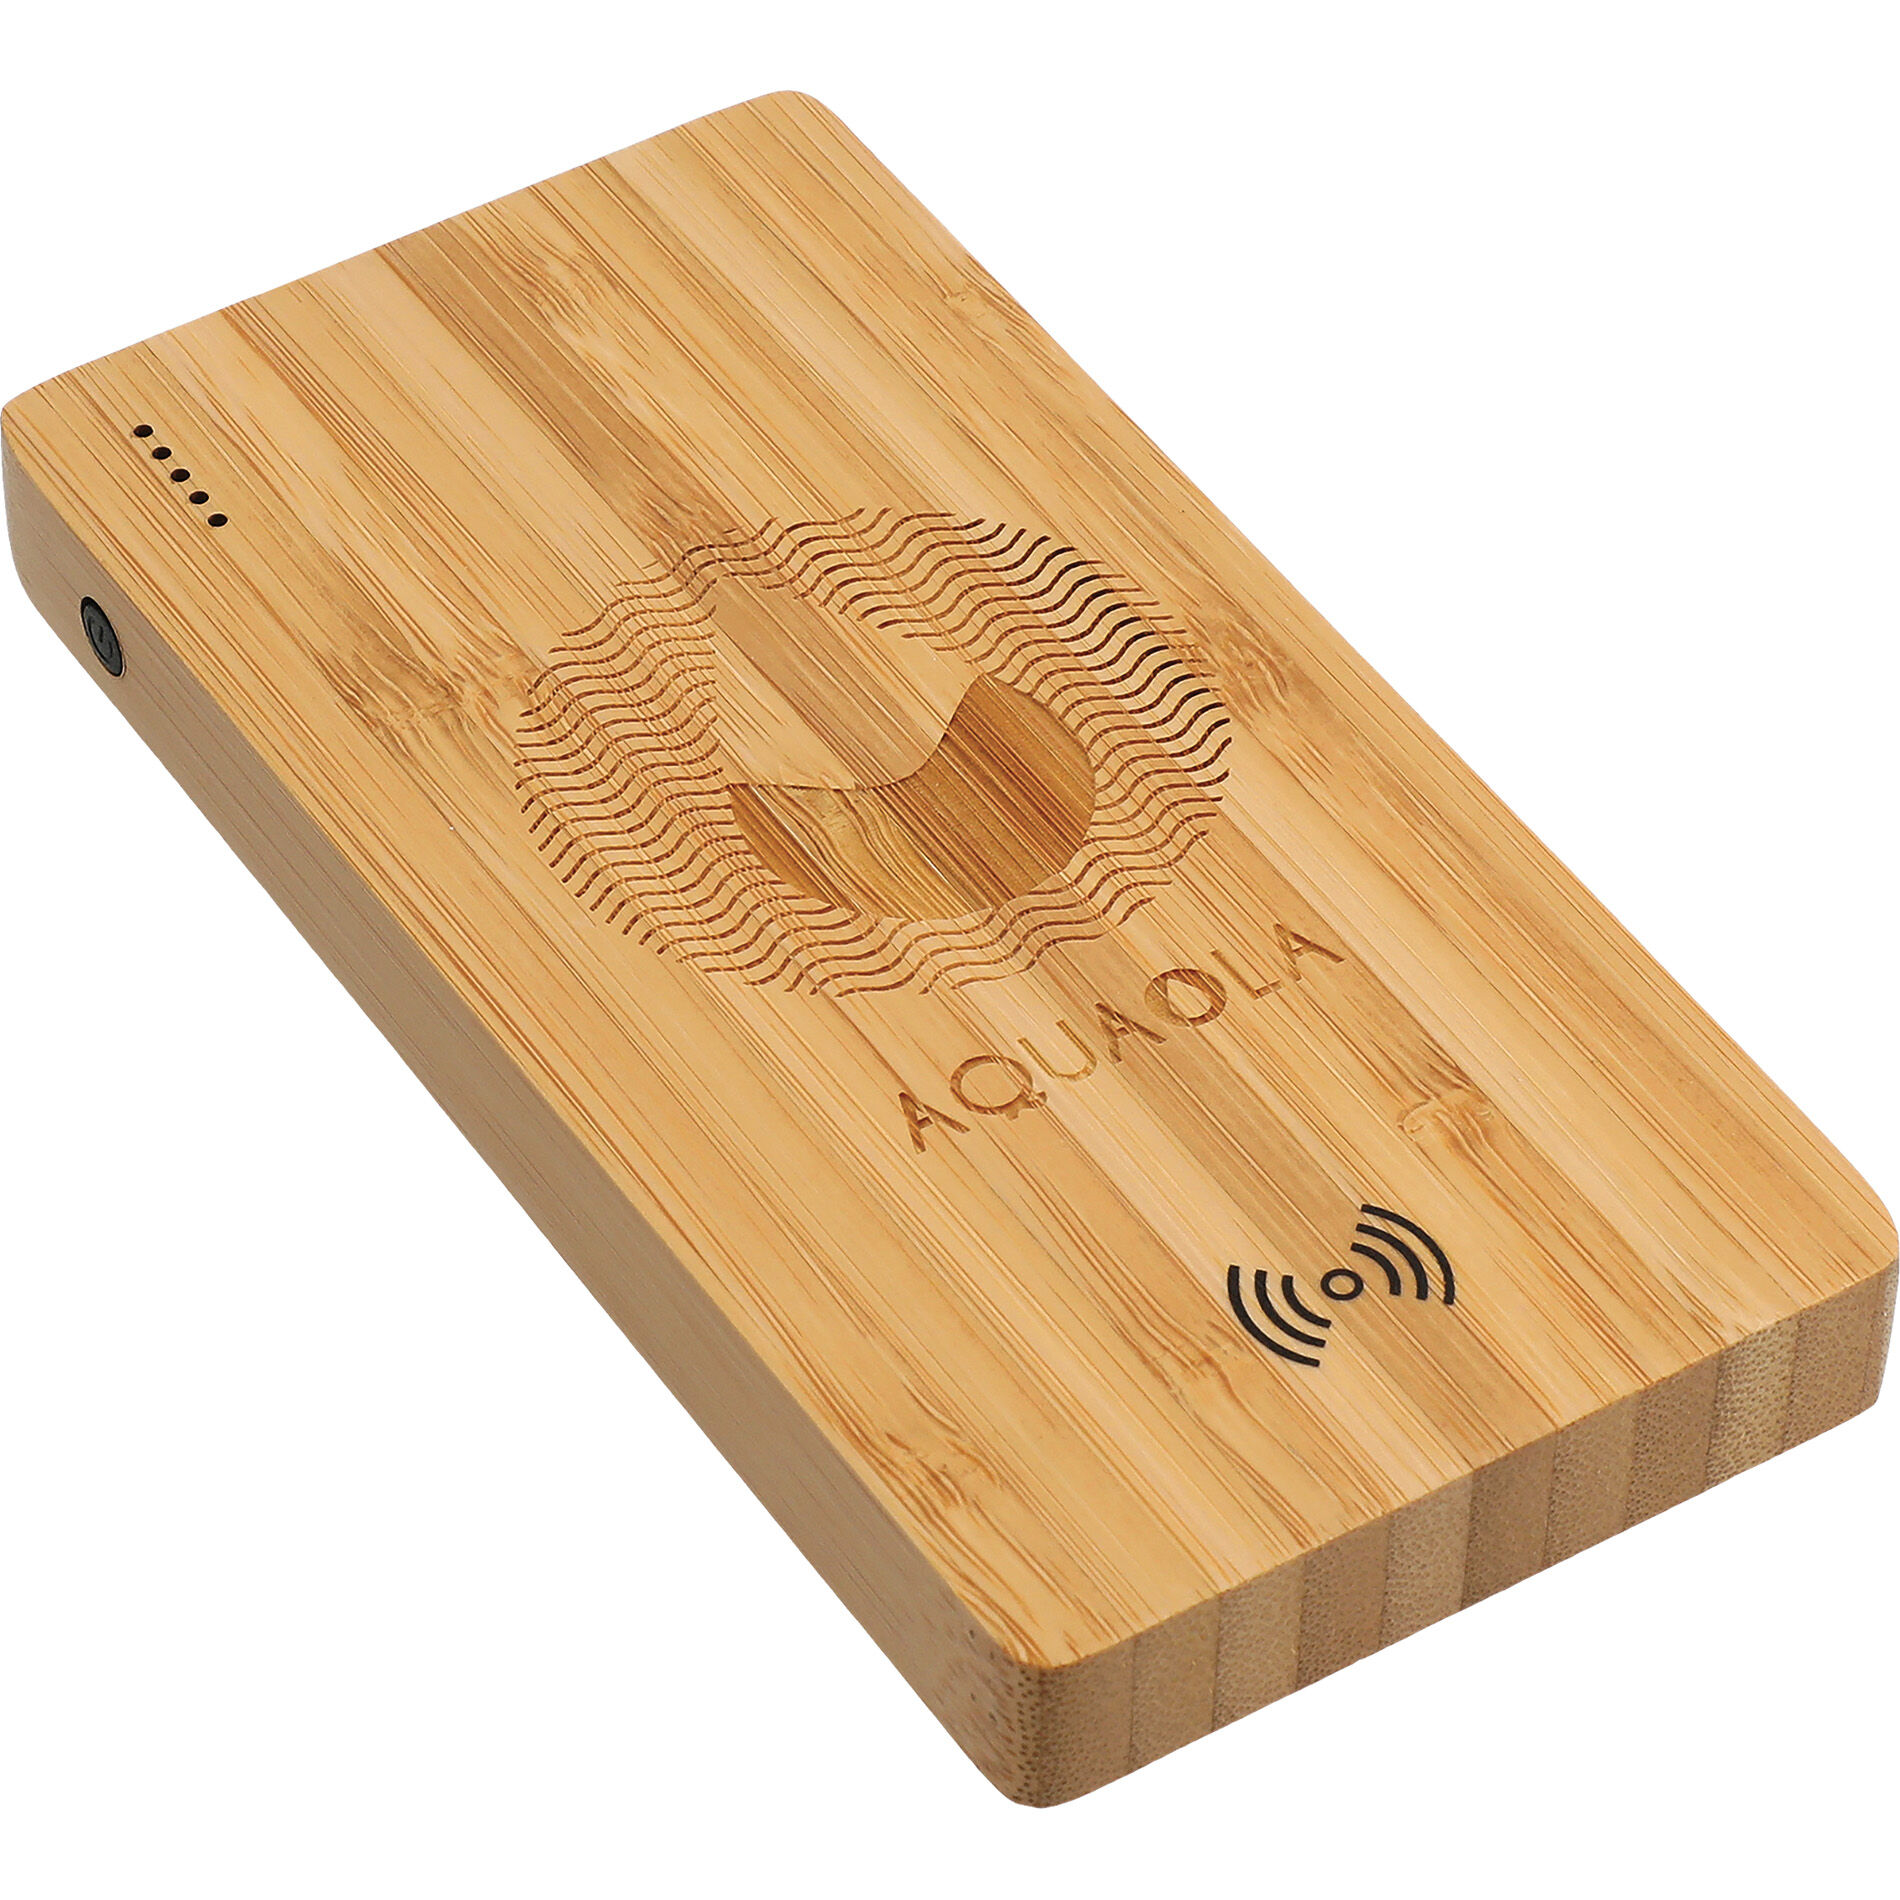 Branded Plank 5000 mAh Bamboo Wireless Power Bank Wood